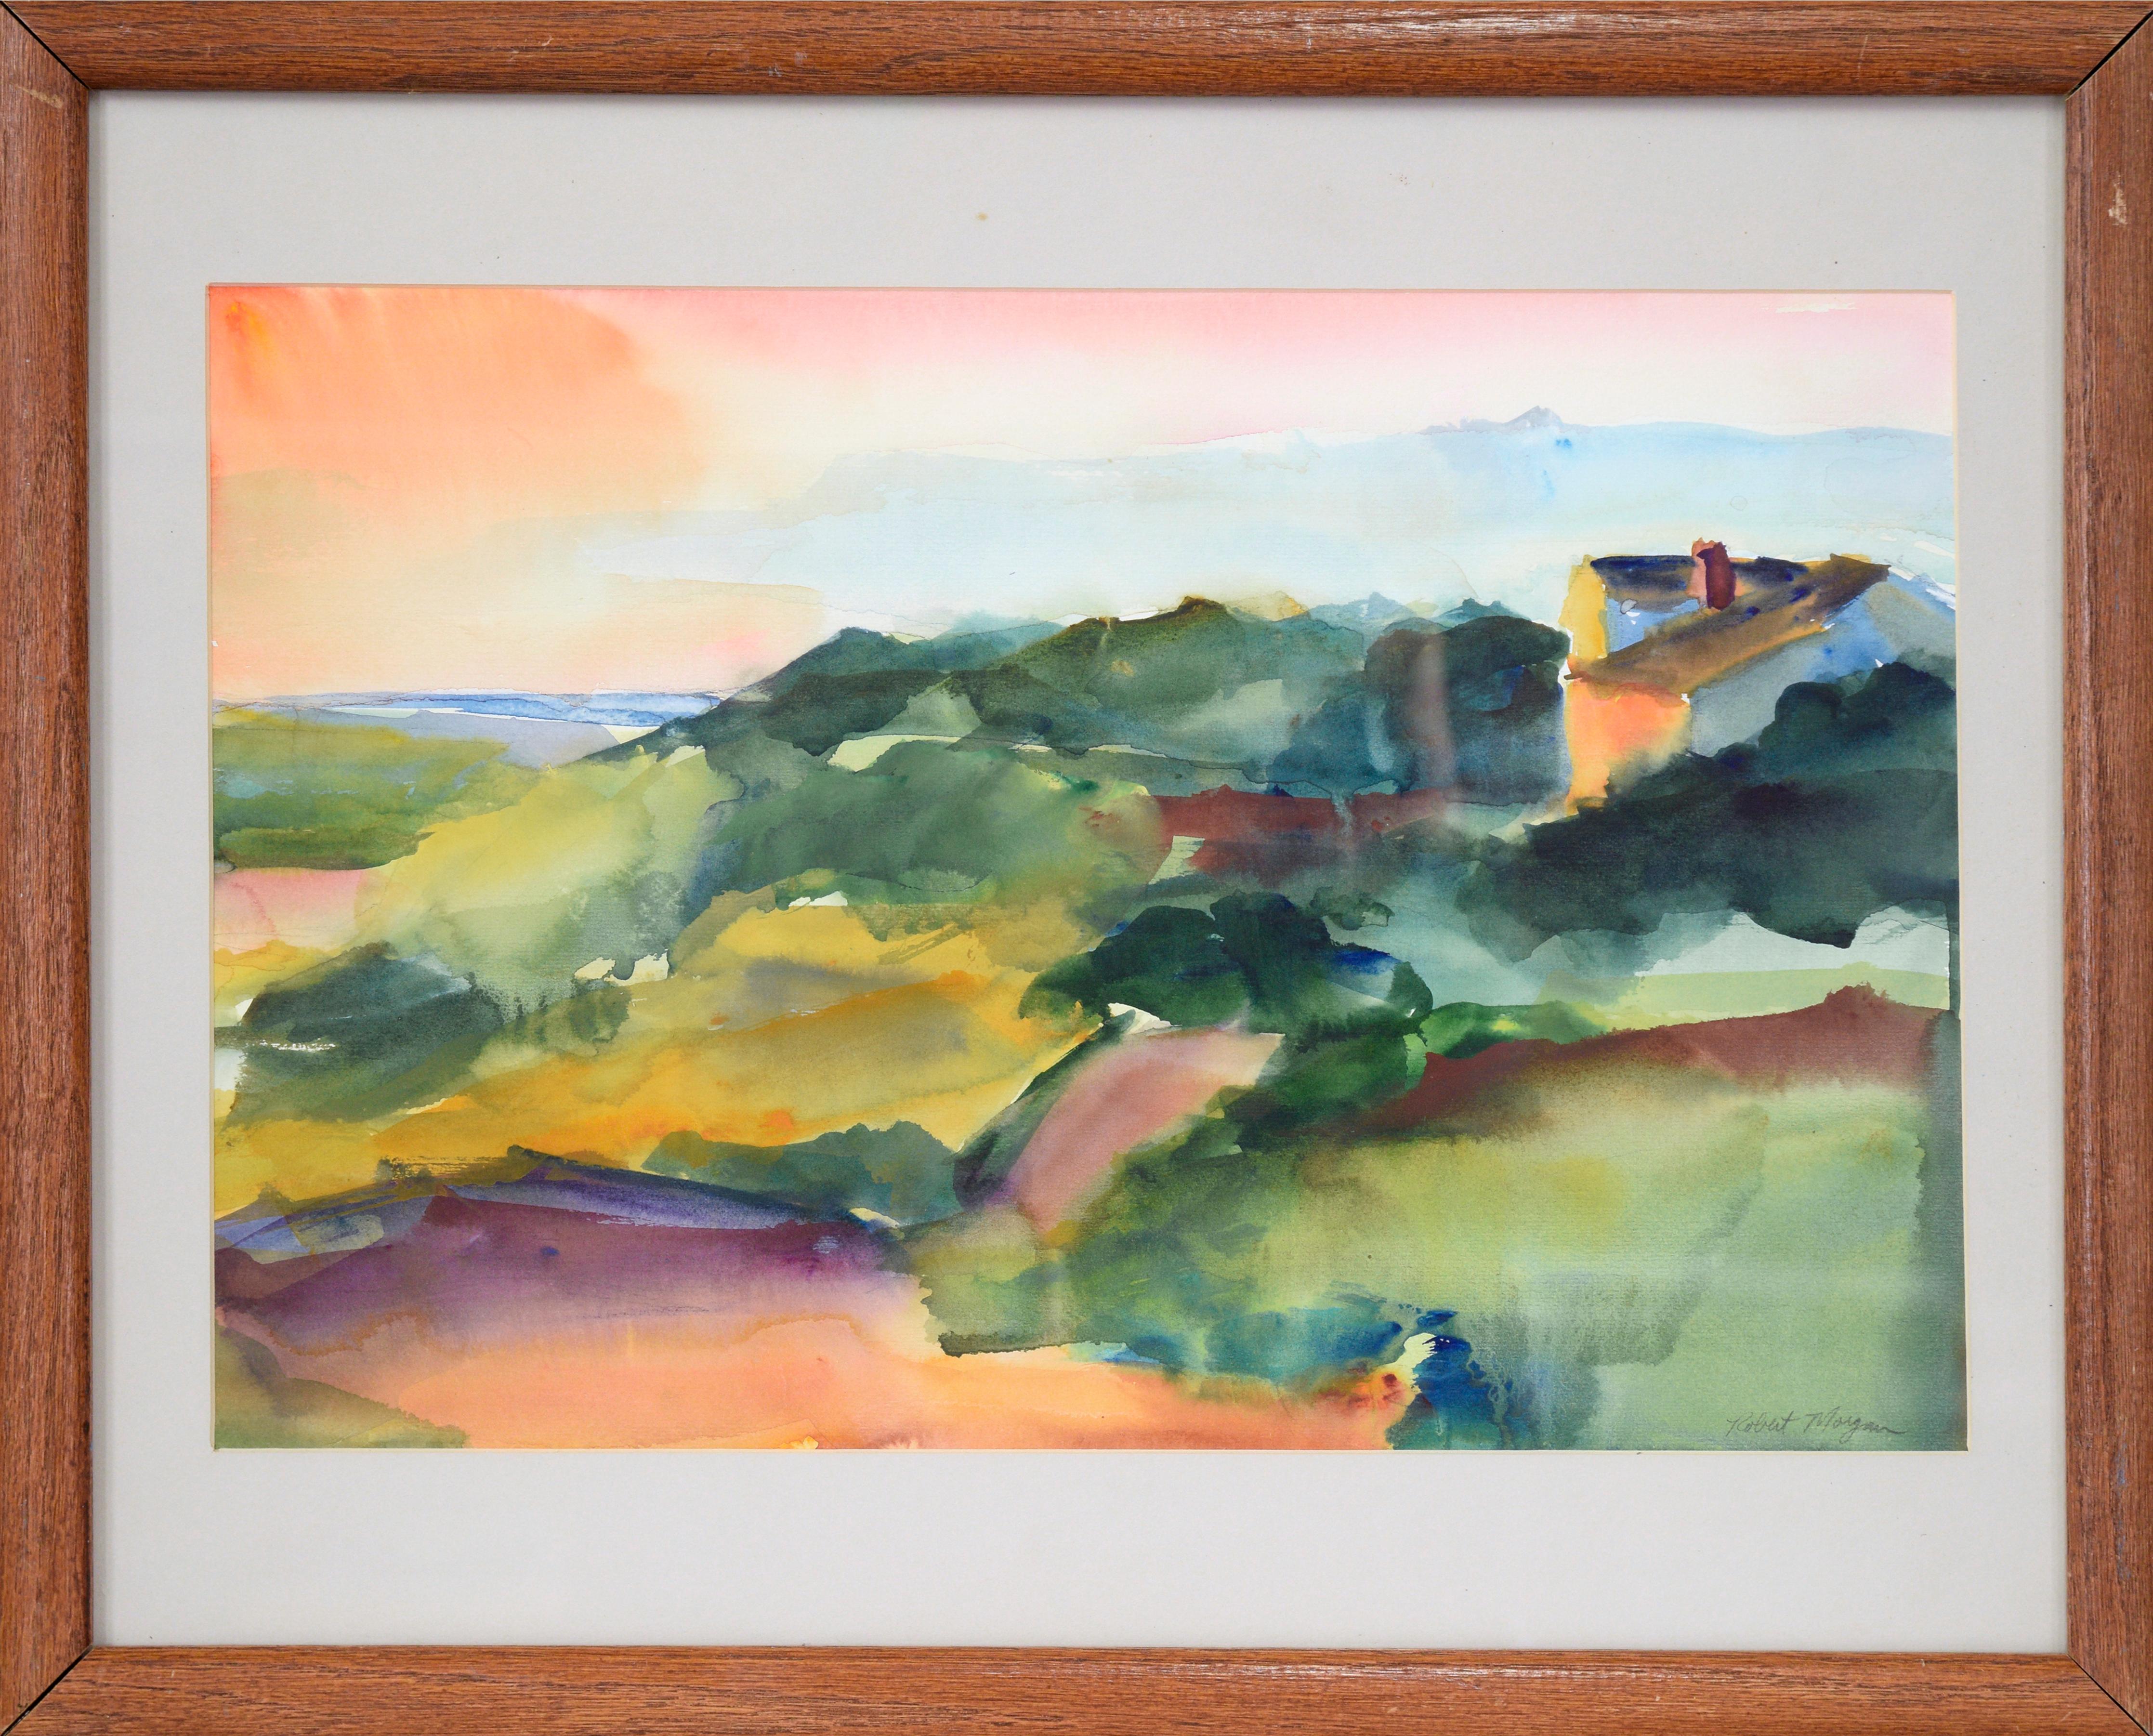 Robert Morgan Landscape Art - "Cape Cod Sunset" - Watercolor on Paper